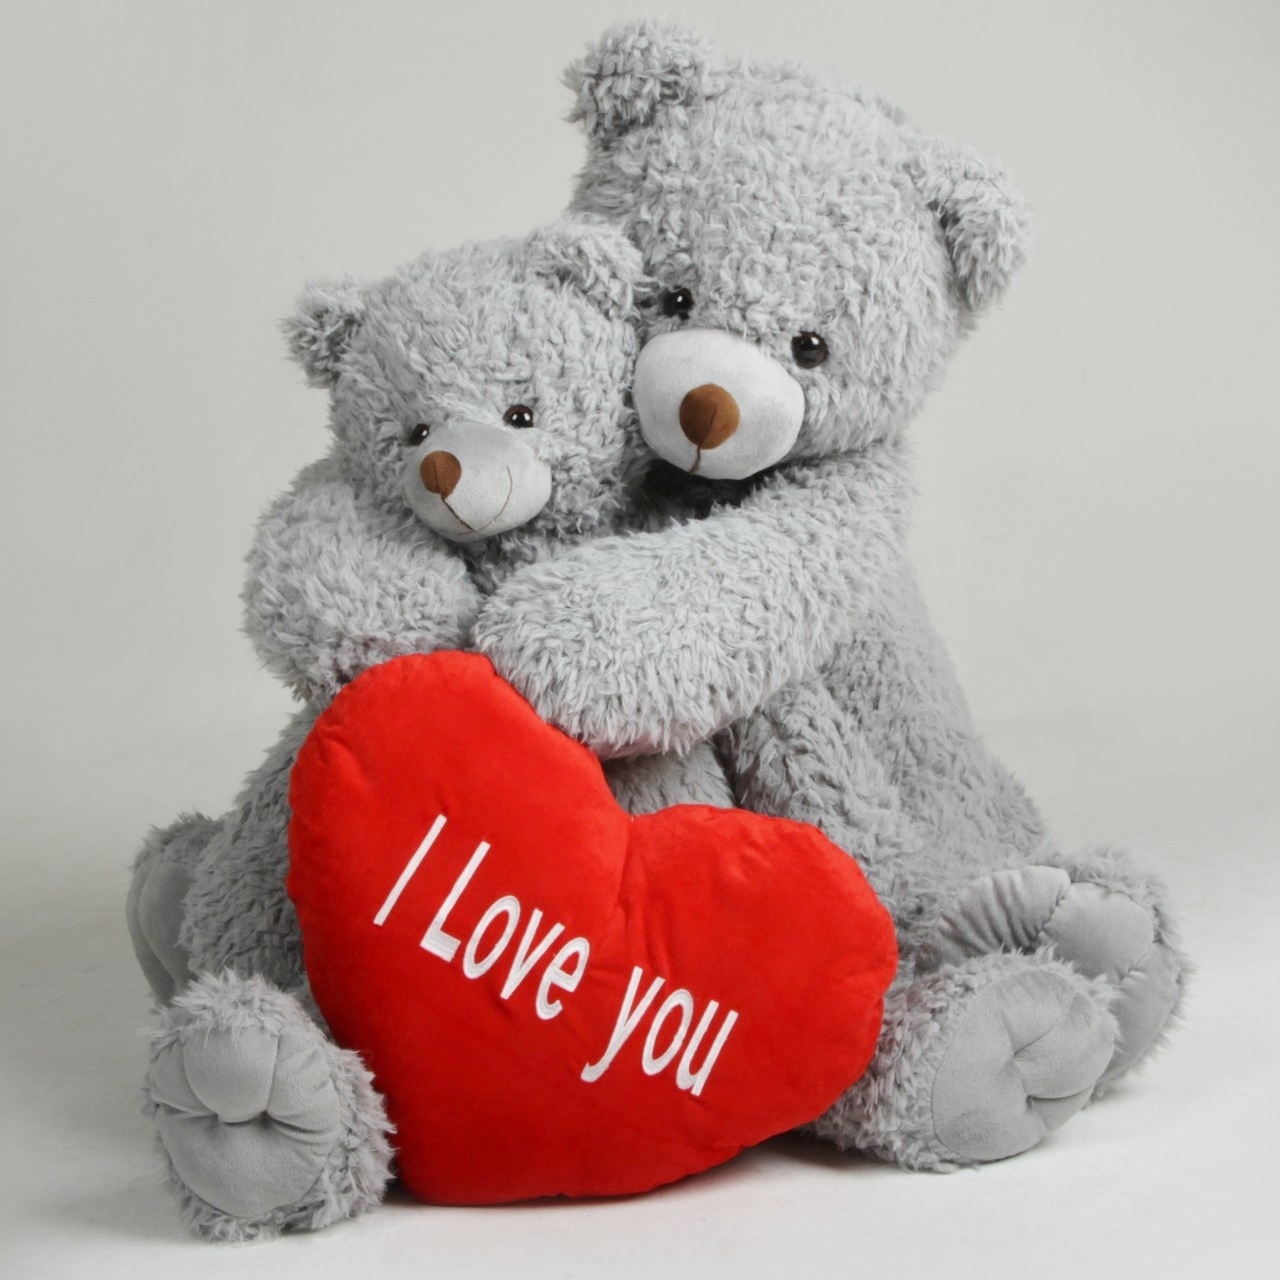 valentines teddy bears